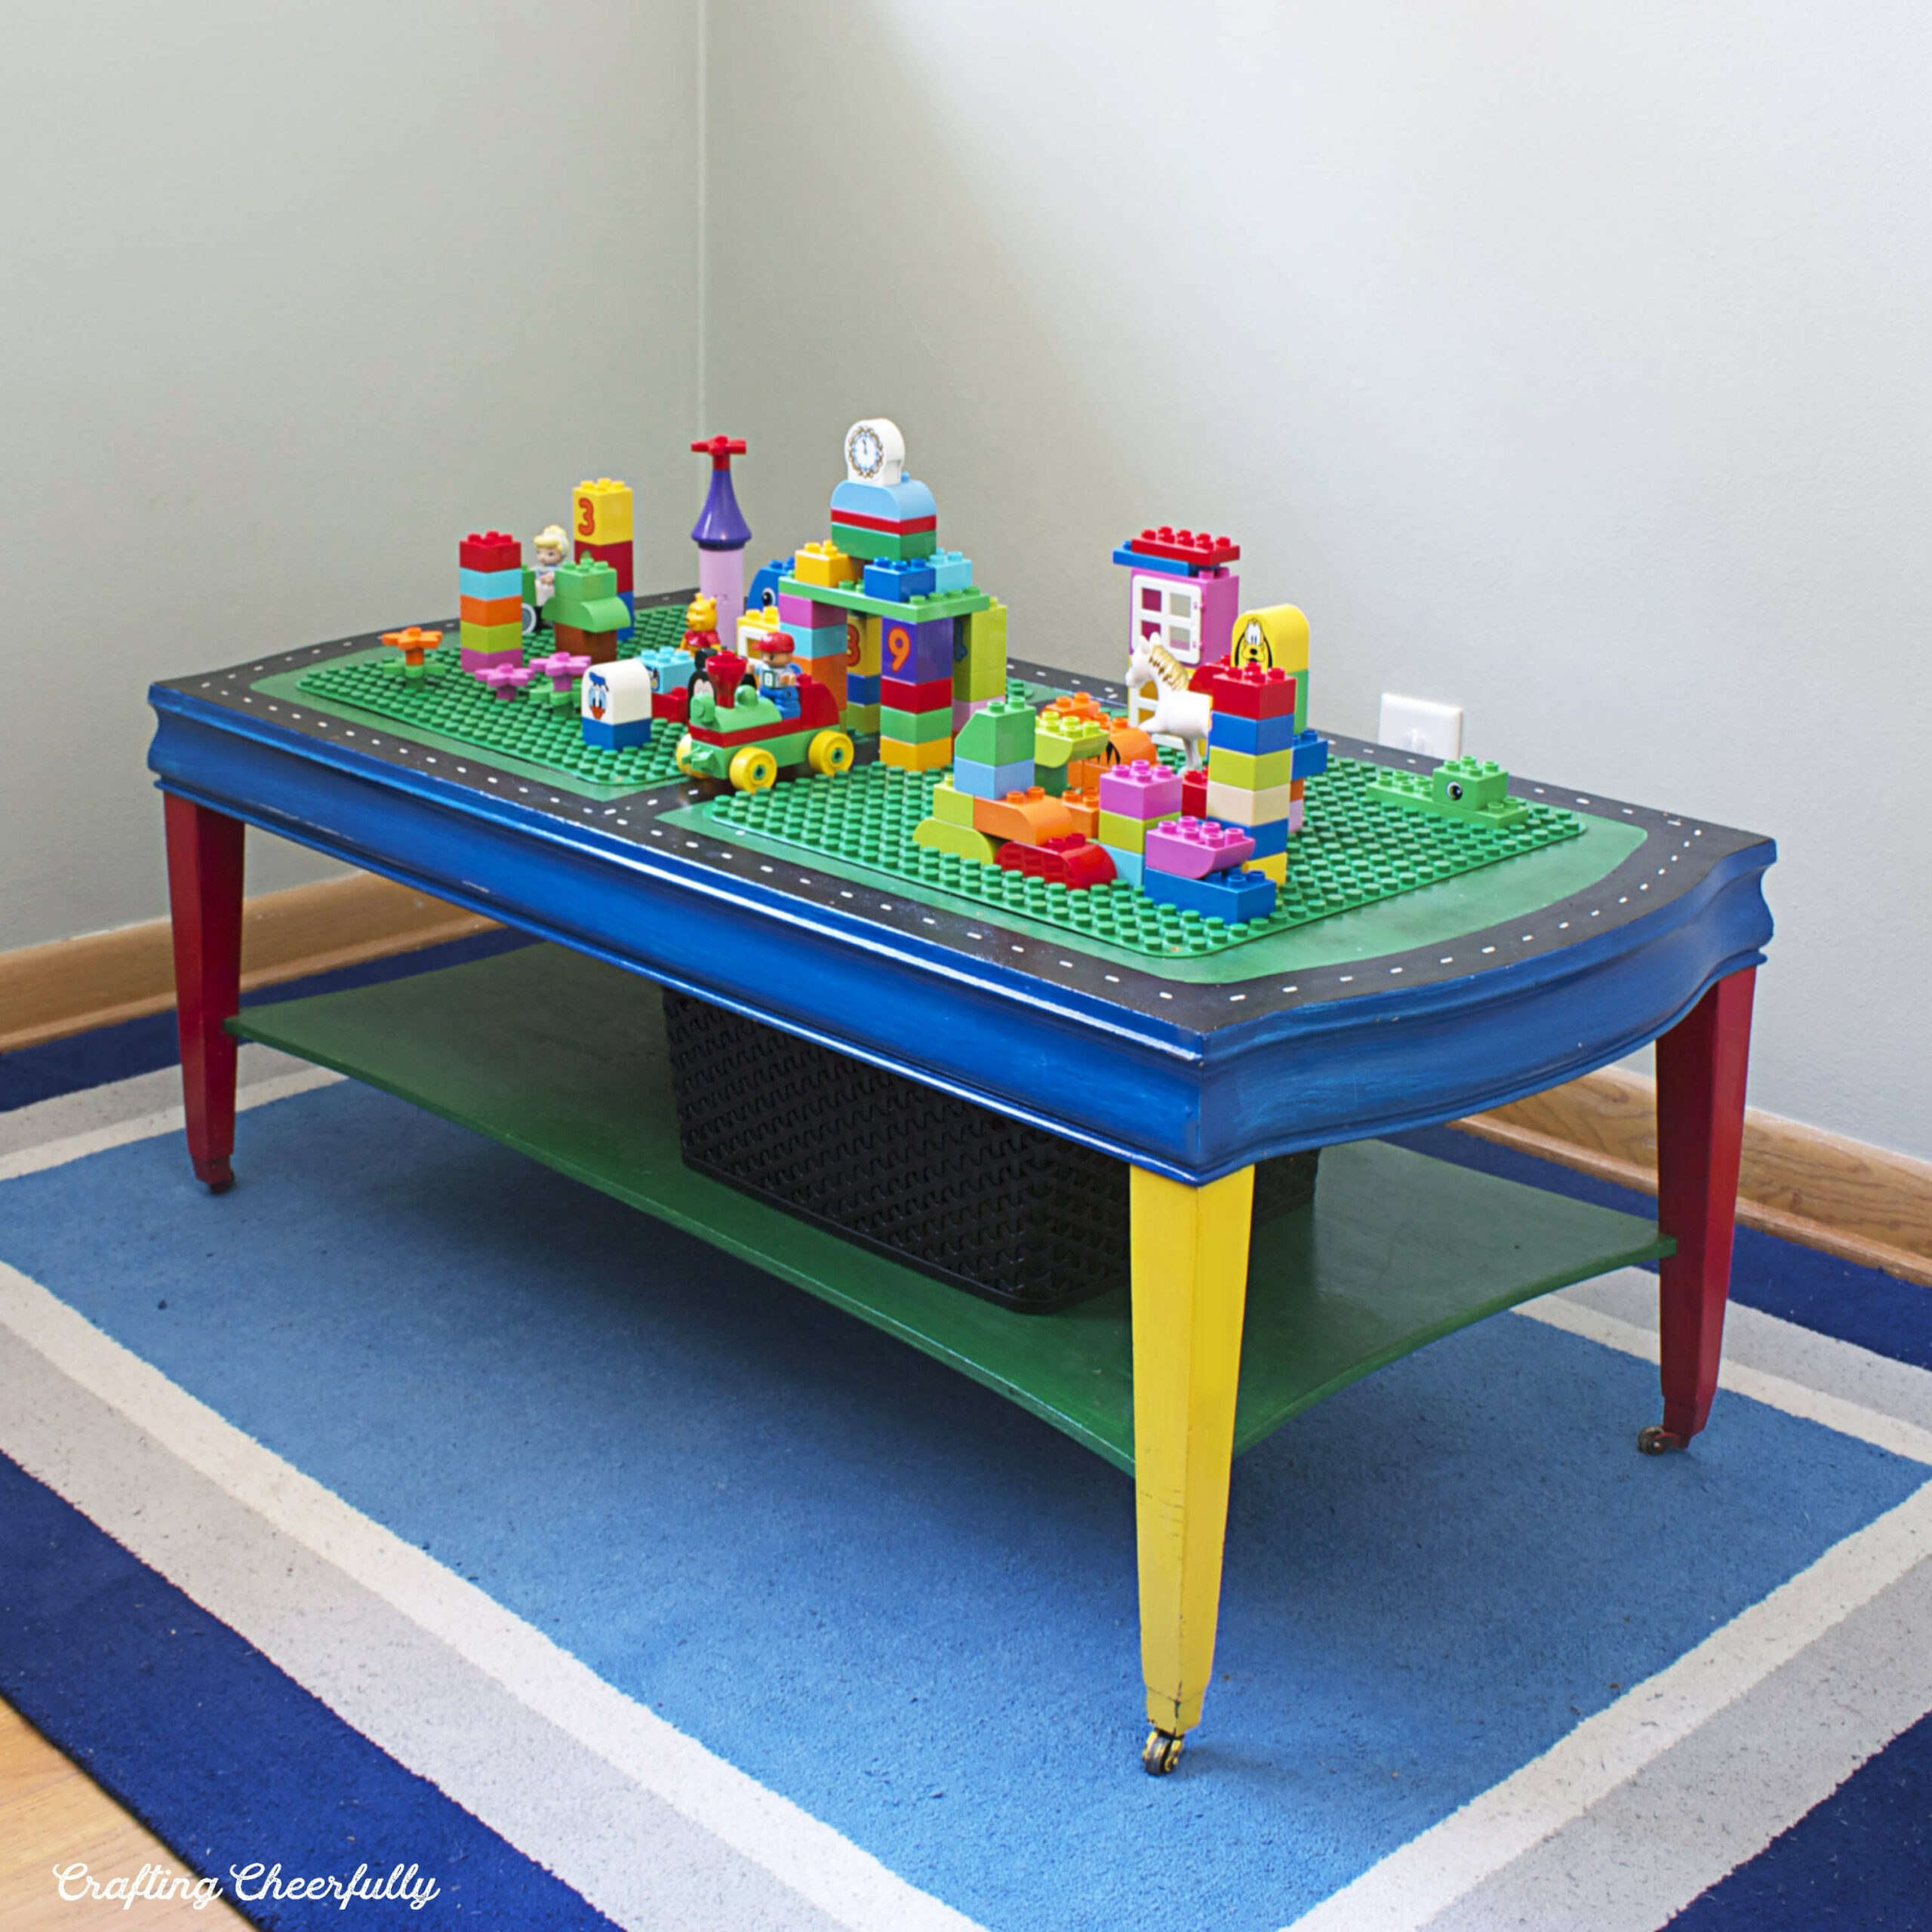 Build a DIY Lego table